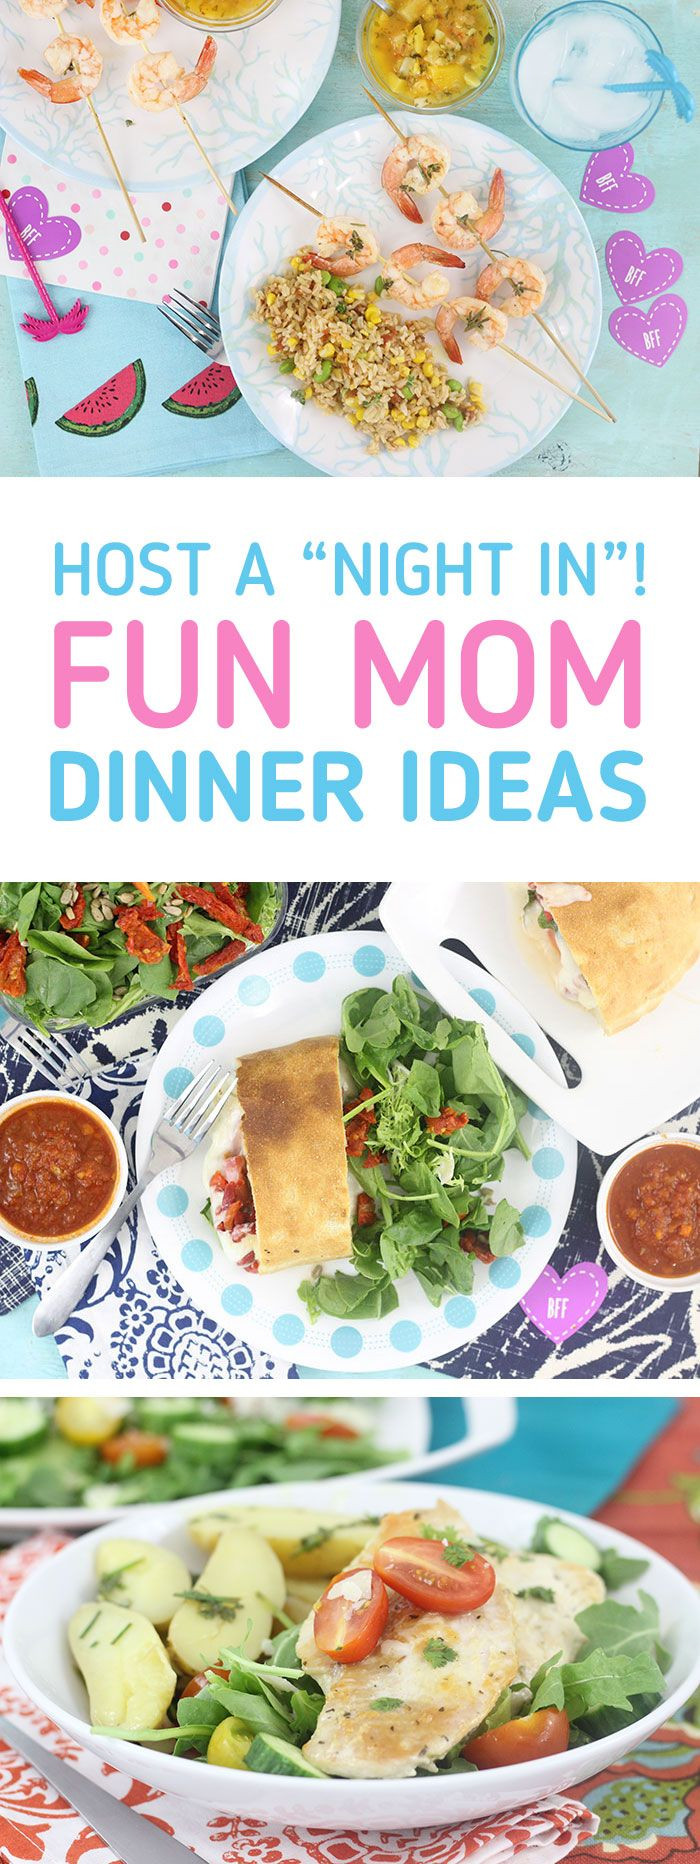 Birthday Dinner Ideas For Mom
 Host a Fun Mom Dinner with these Ideas